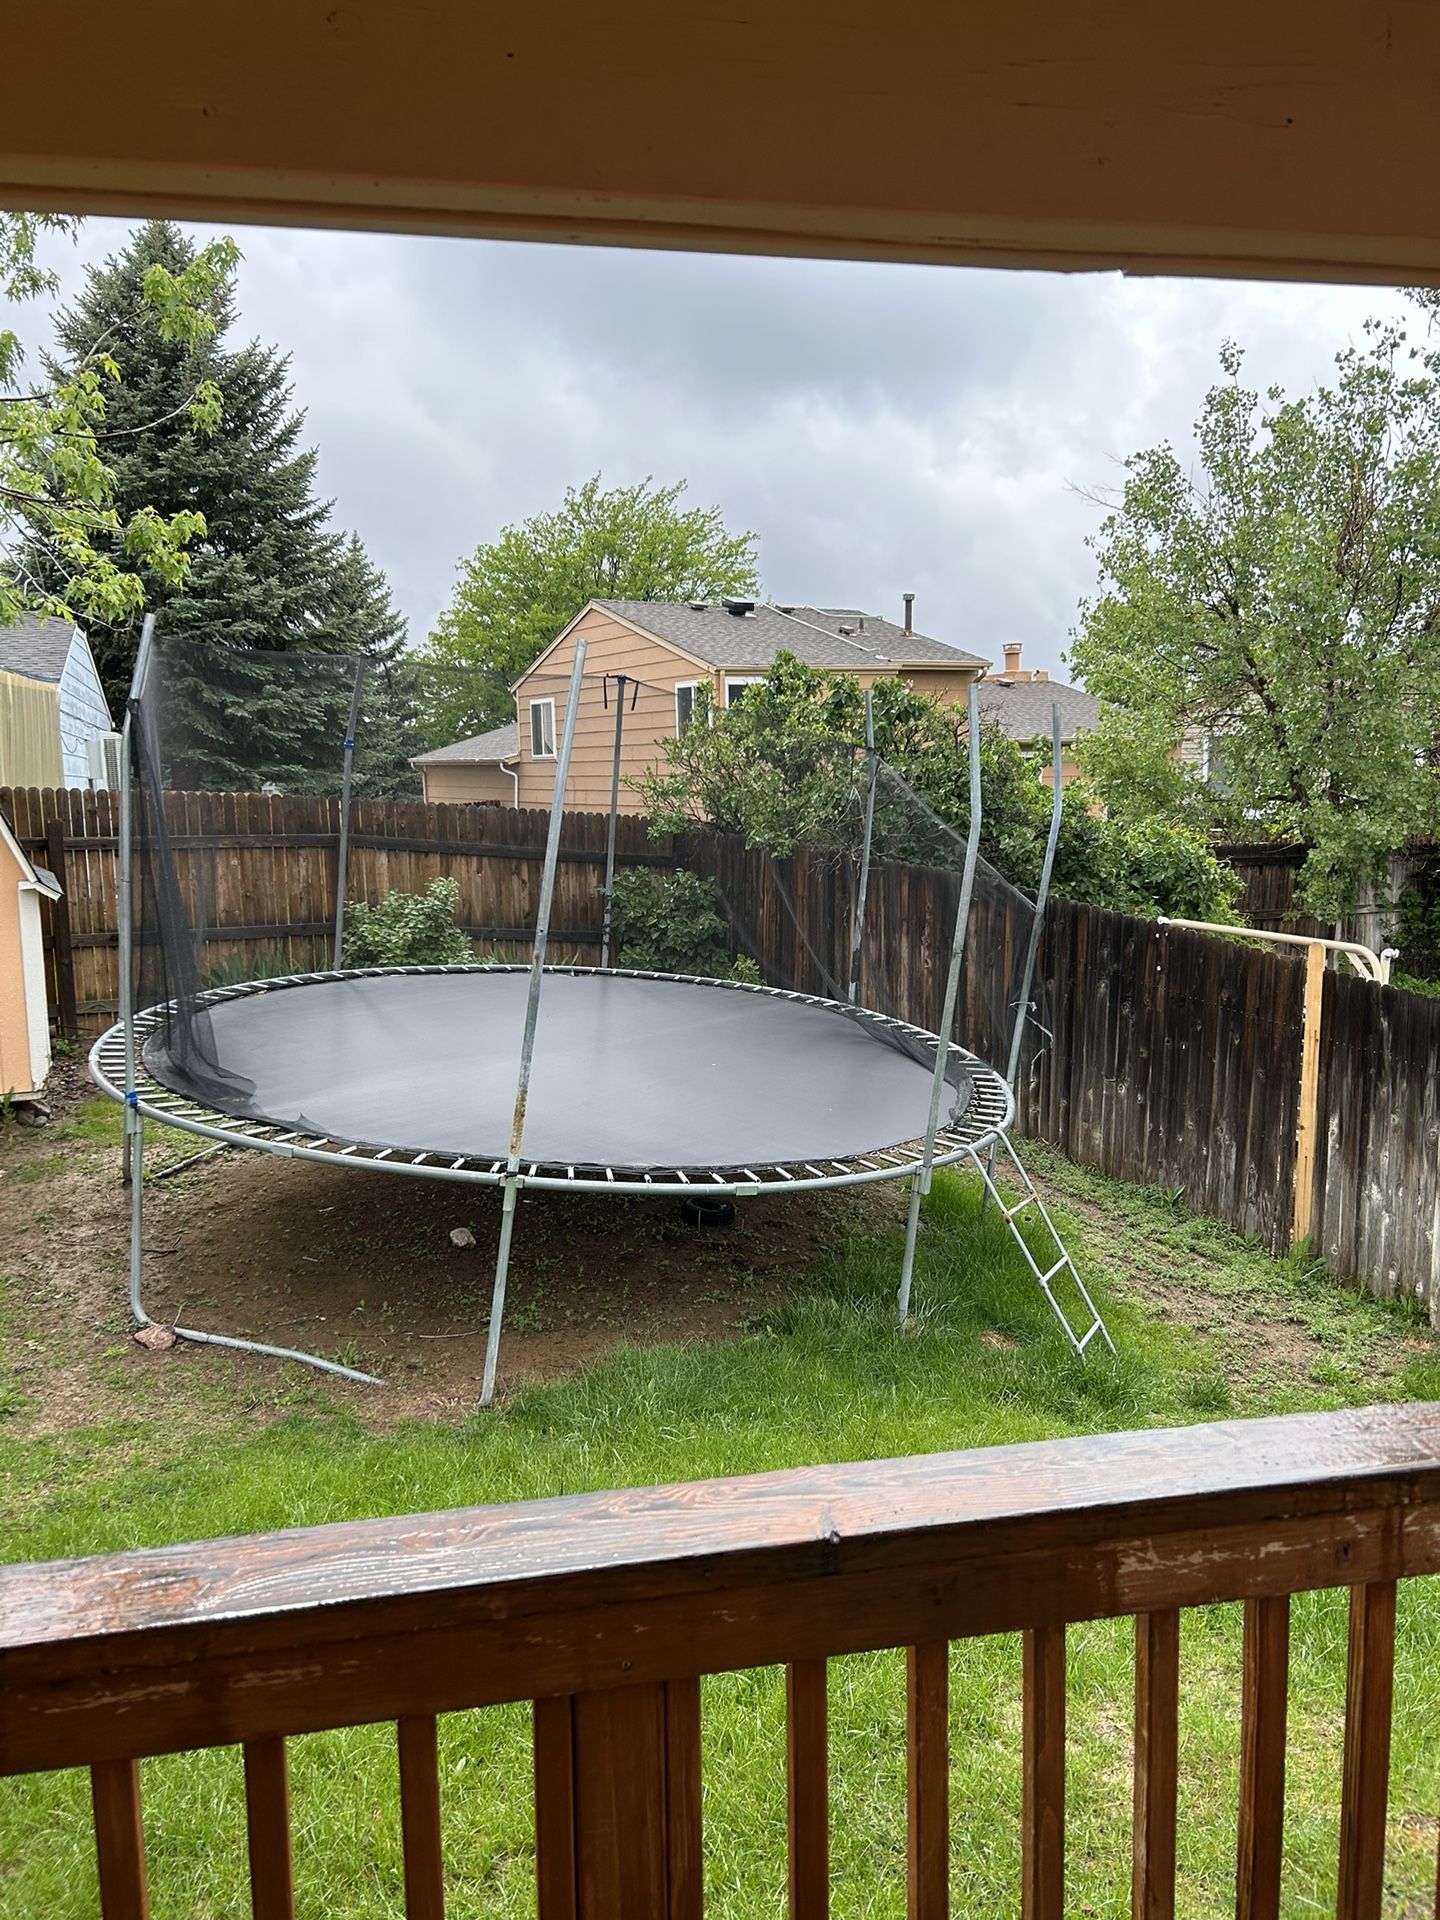 Free trampoline or scrap metal